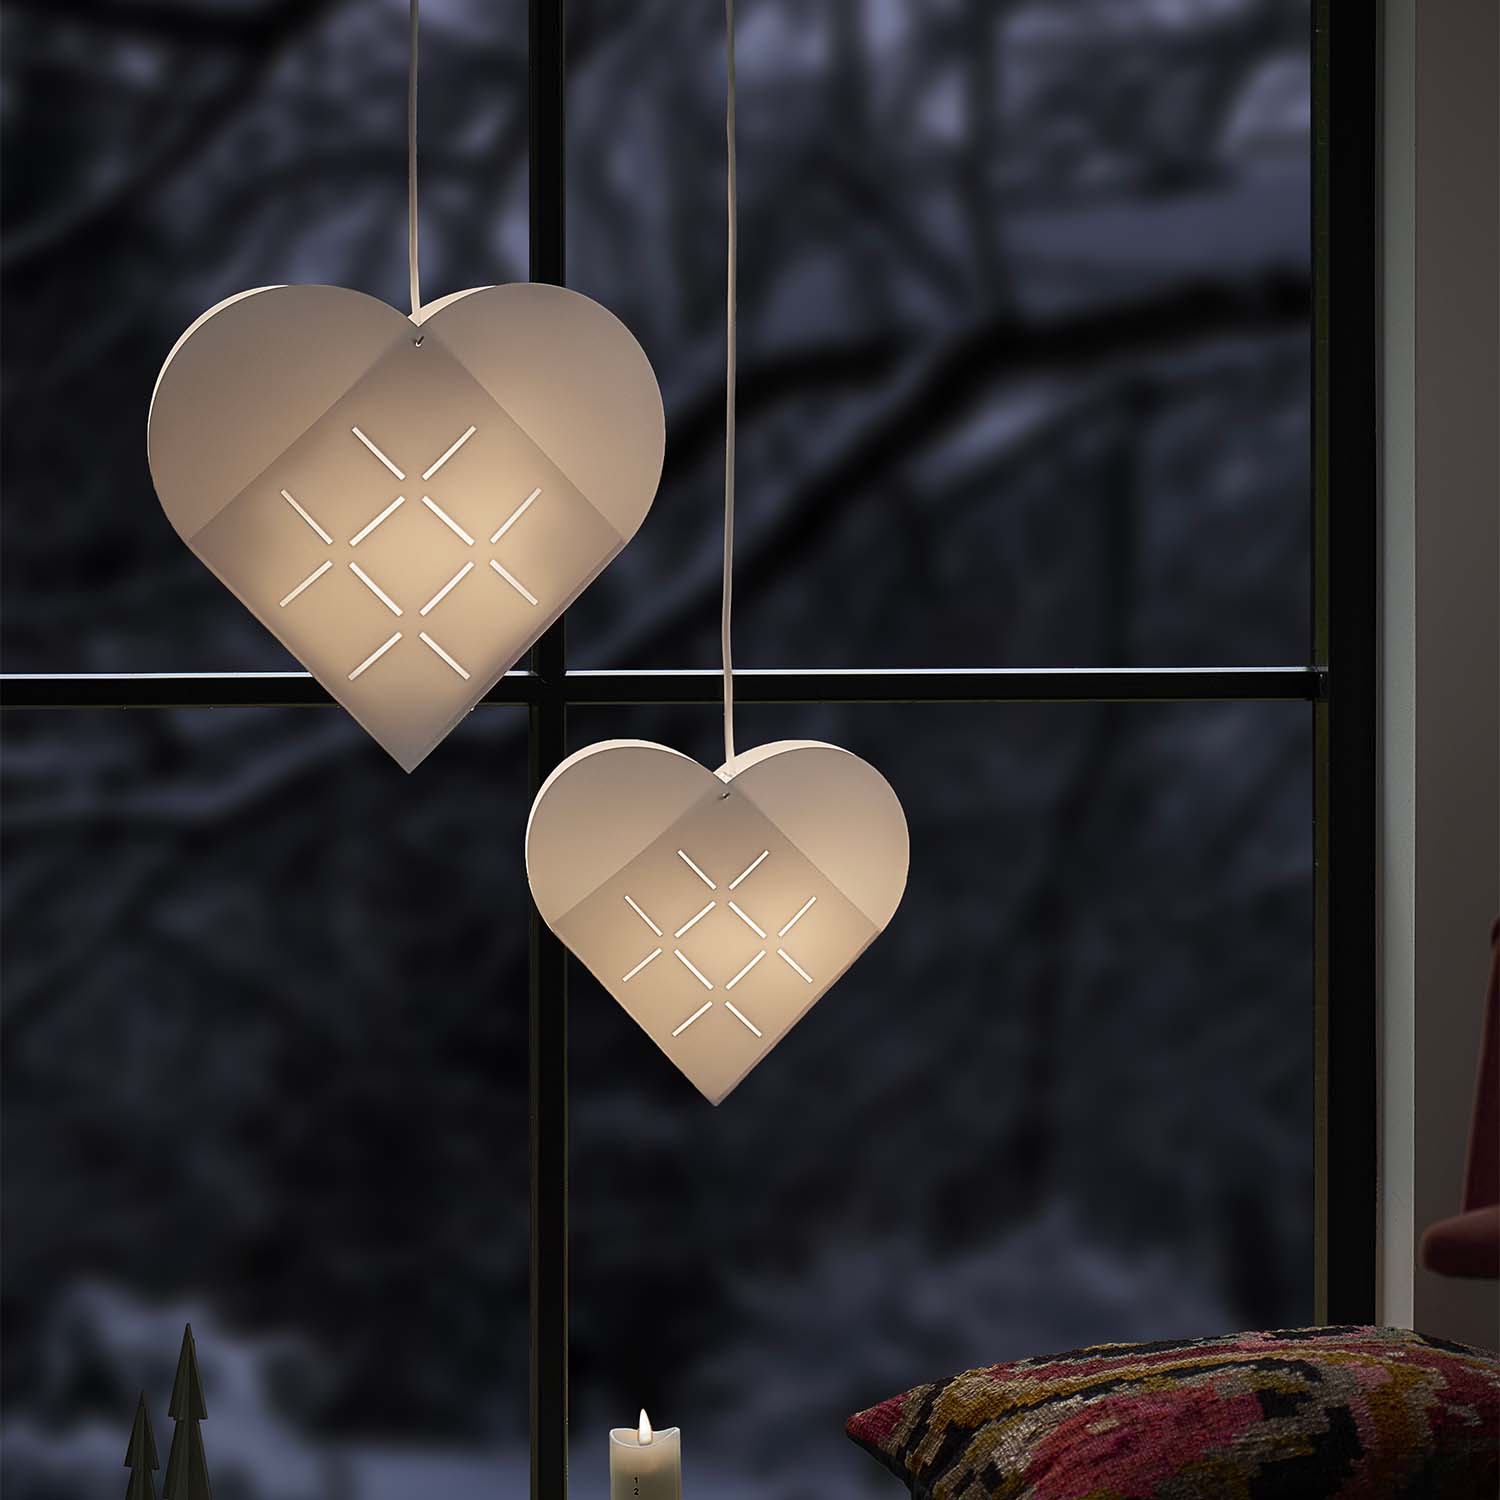 HEART LIGHT - Handcrafted heart-shaped pendant light